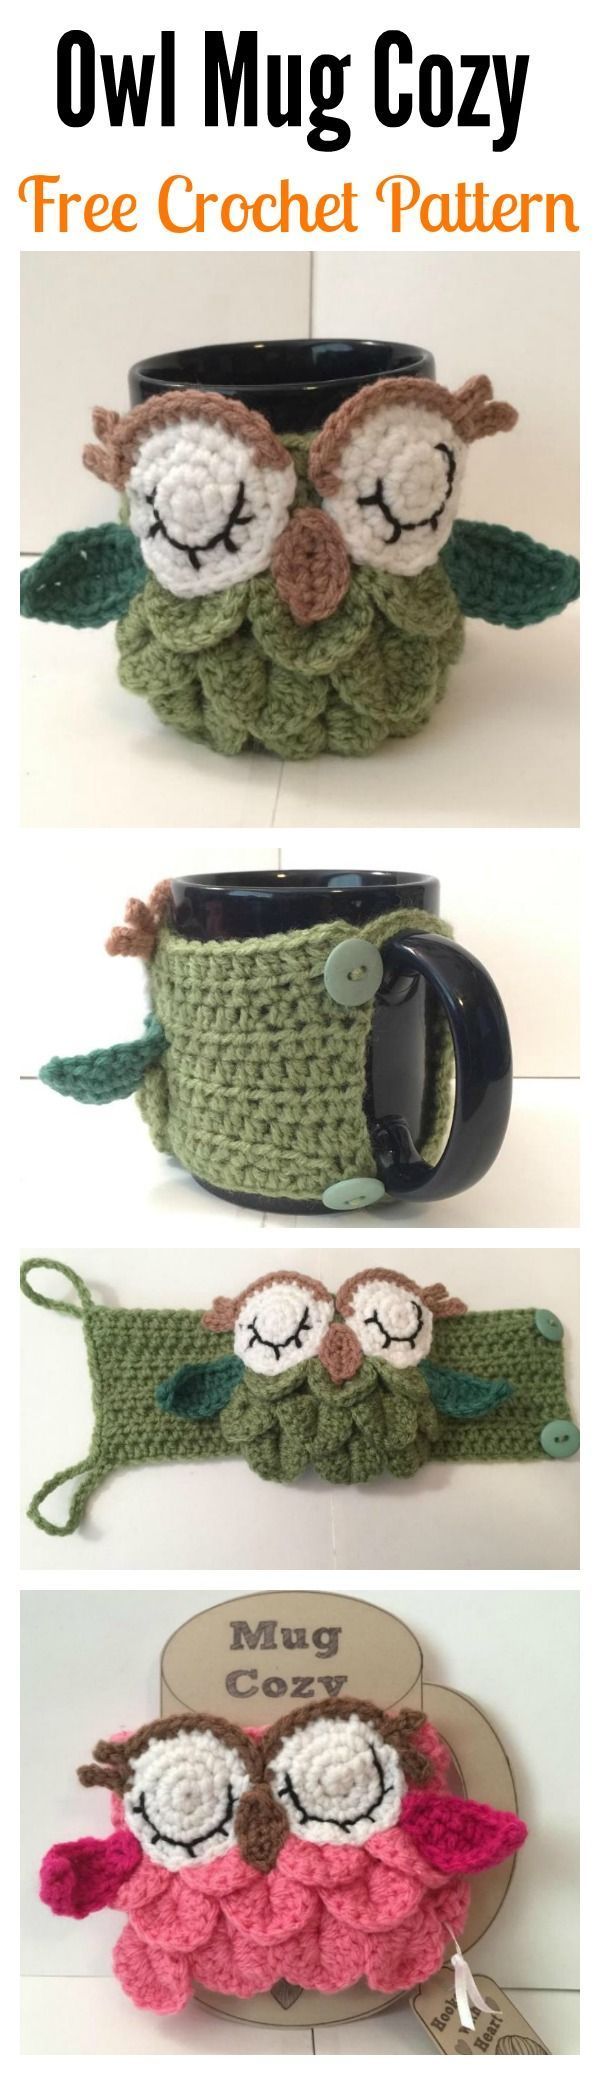 Crochet-Owl-Mug-Cozy-Free-Patterns.jpg